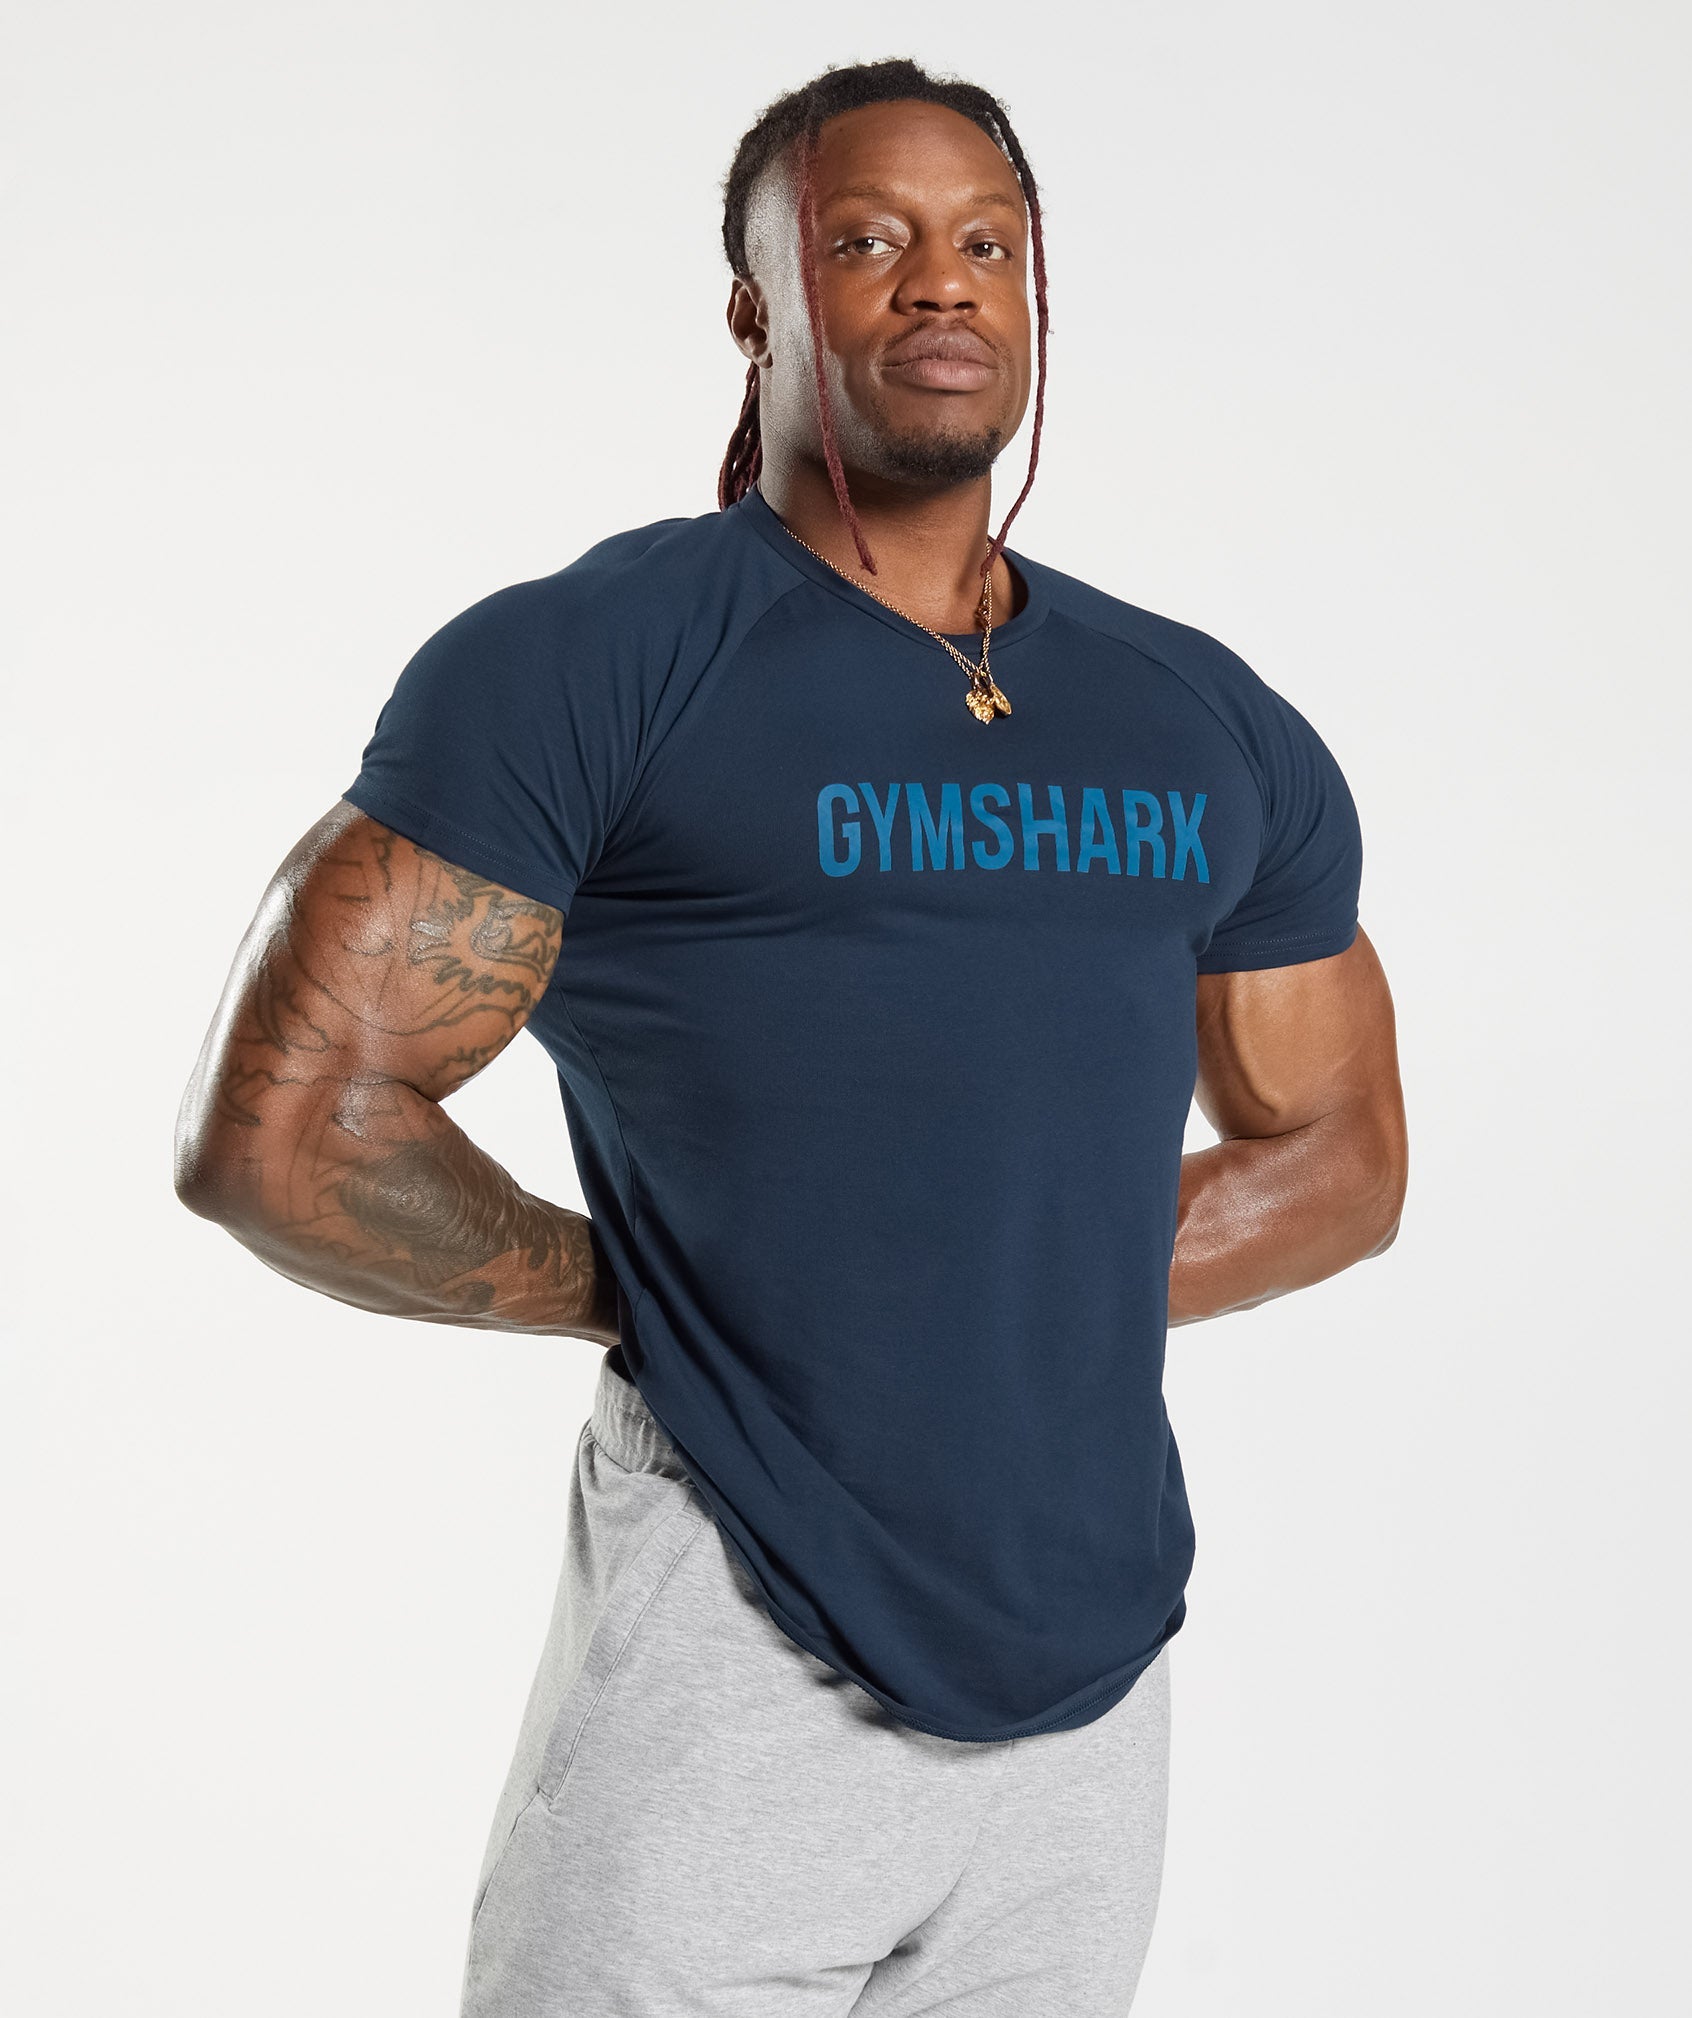 Gymshark Loja - Camiseta Gymshark Homem Apollo Azul Marinho - Roupa Gymshark  Portugal